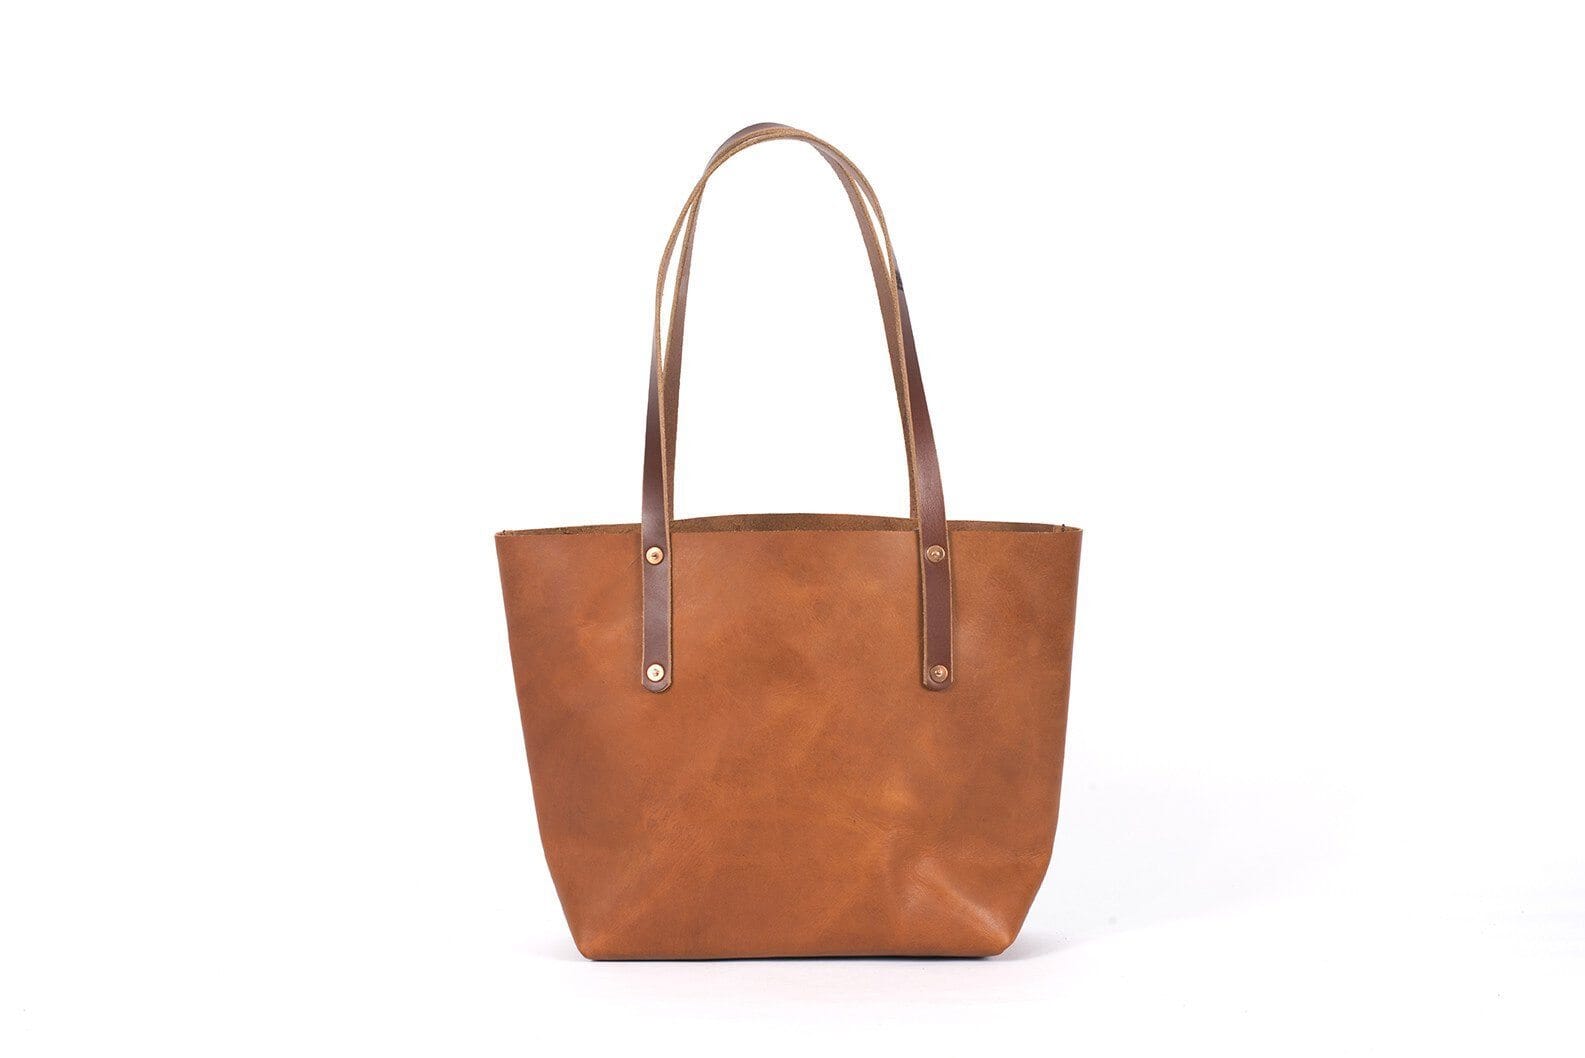 leather tote bag, full grain leather bag - caramel color - Avery Tote Medium